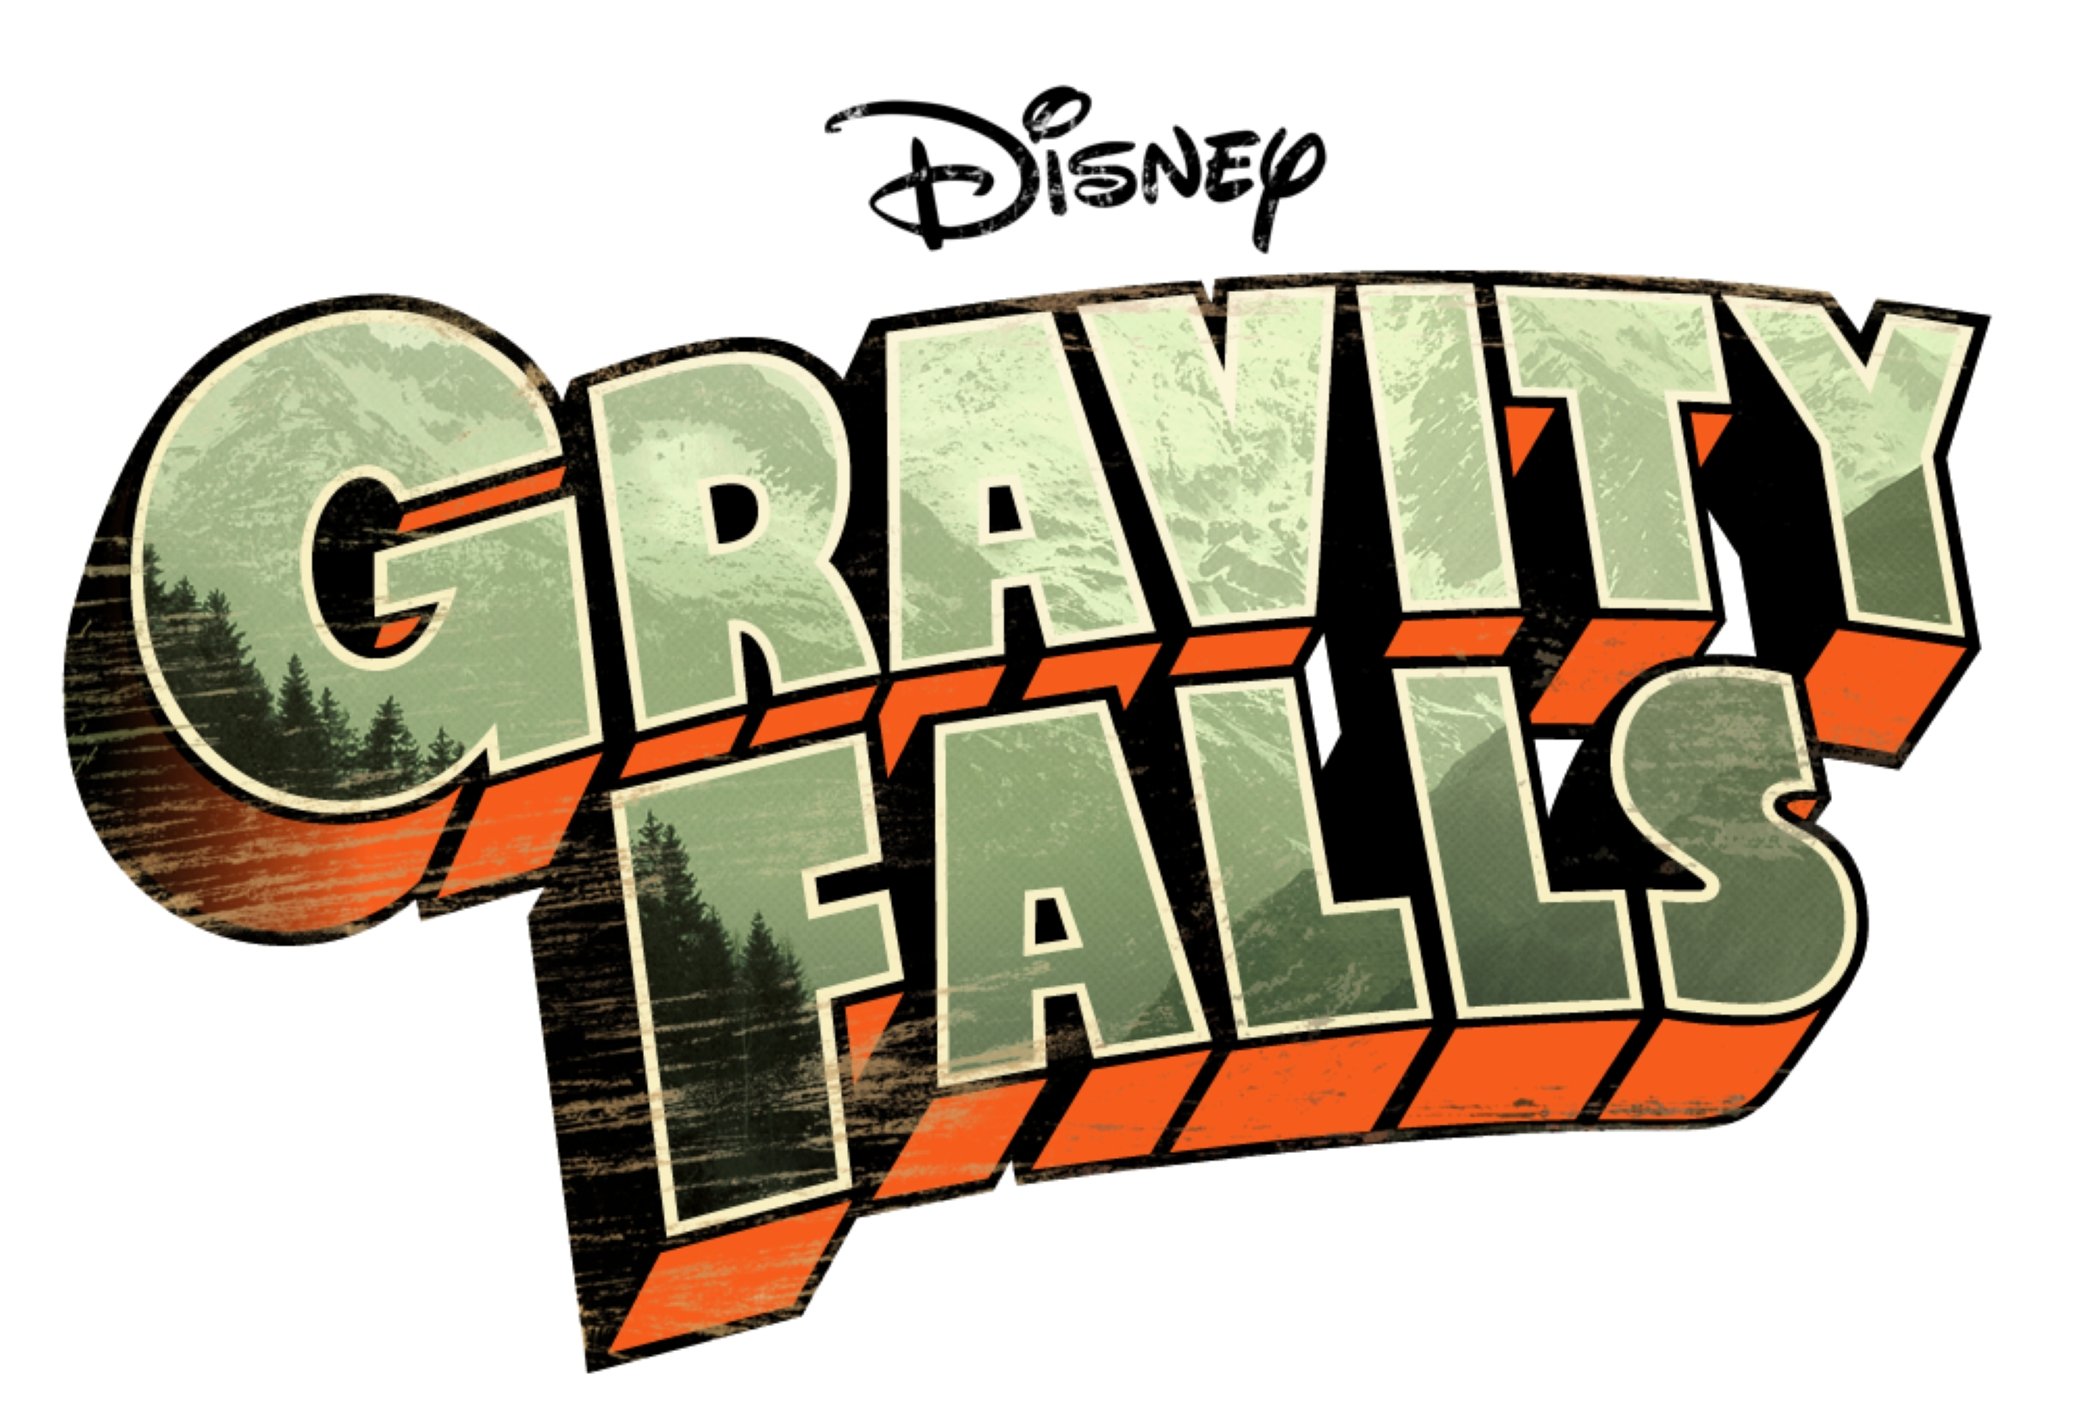 gravity, Falls, Disney, Family, Animated, Cartoon, Series, Comedy Wallpaper